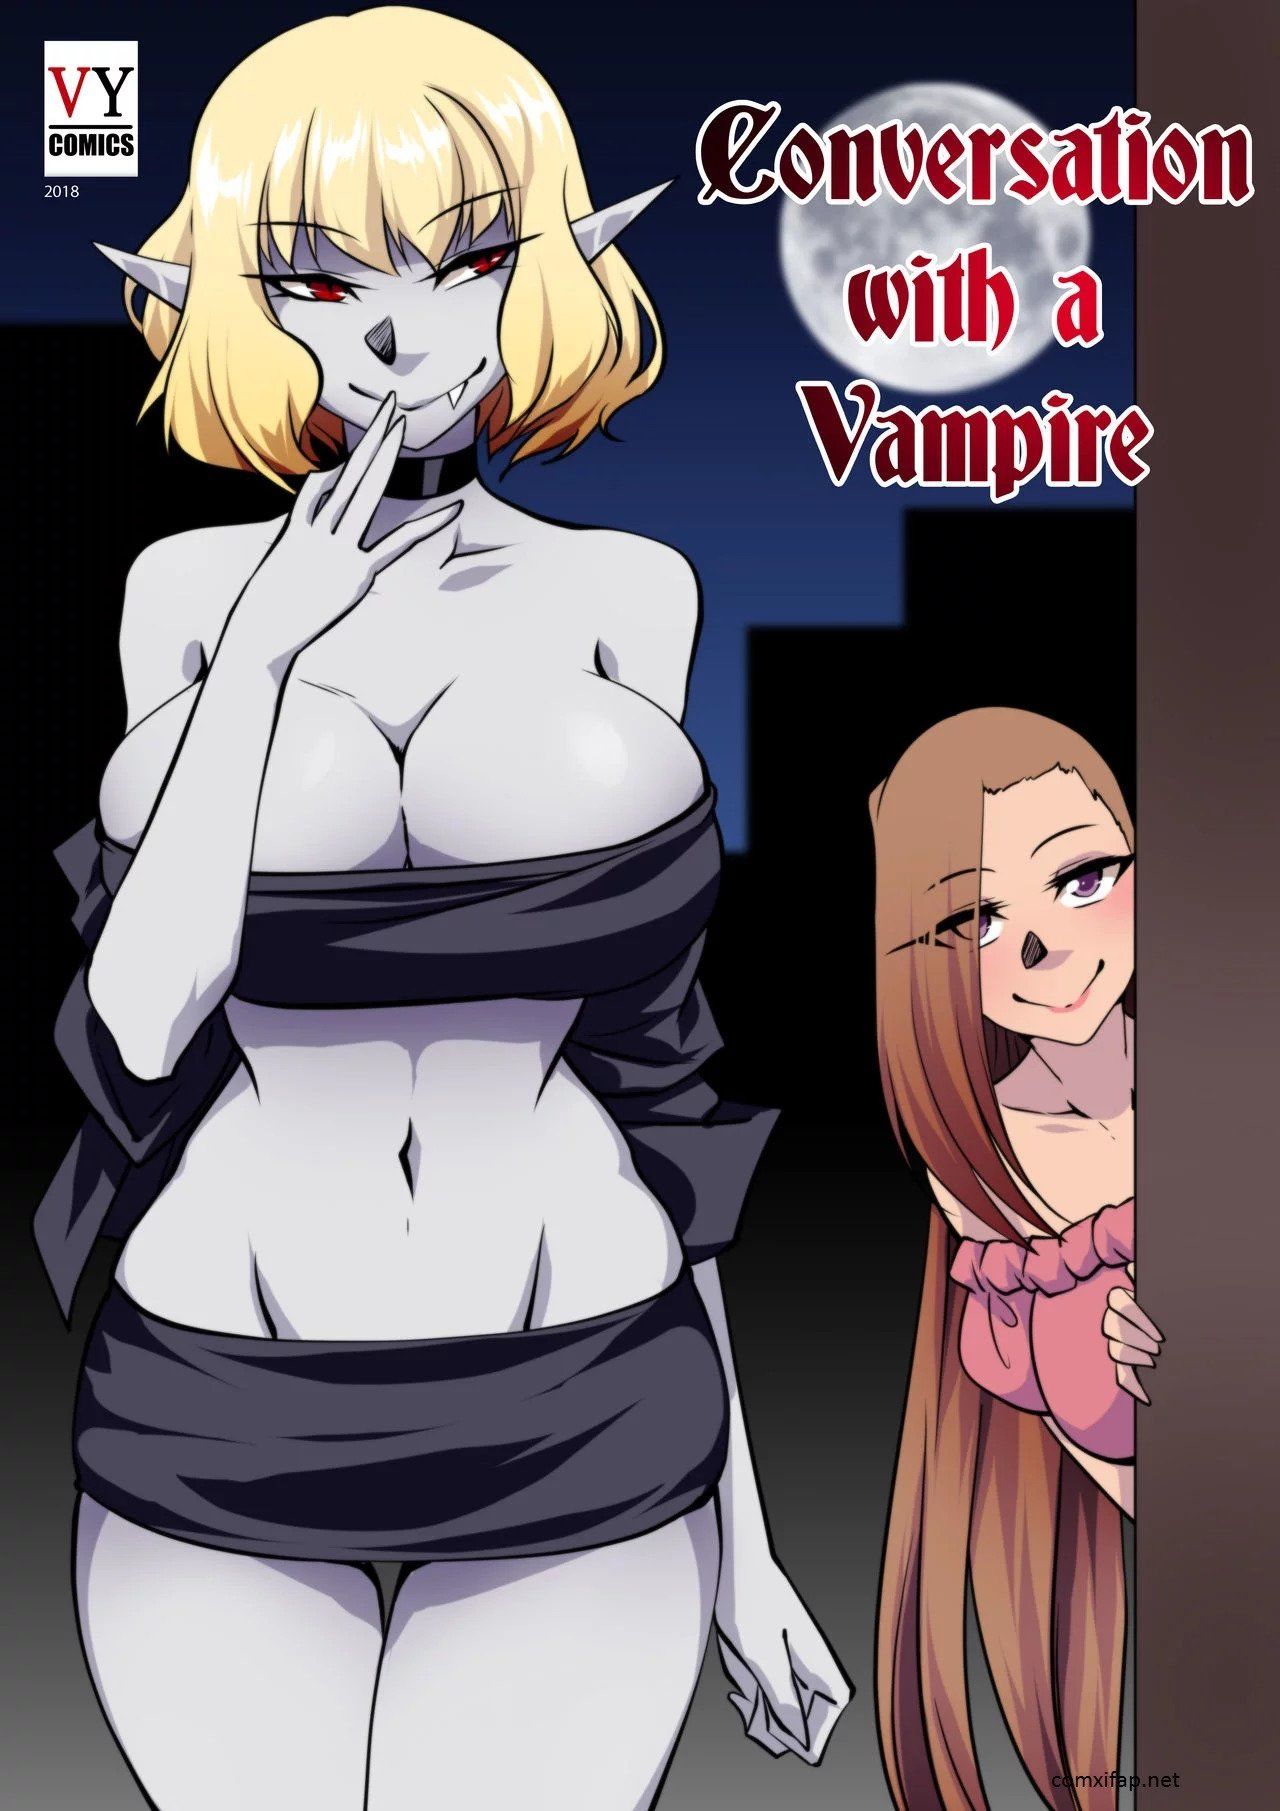 Conversation with a Vampire - Aya Yanagisawa page 1